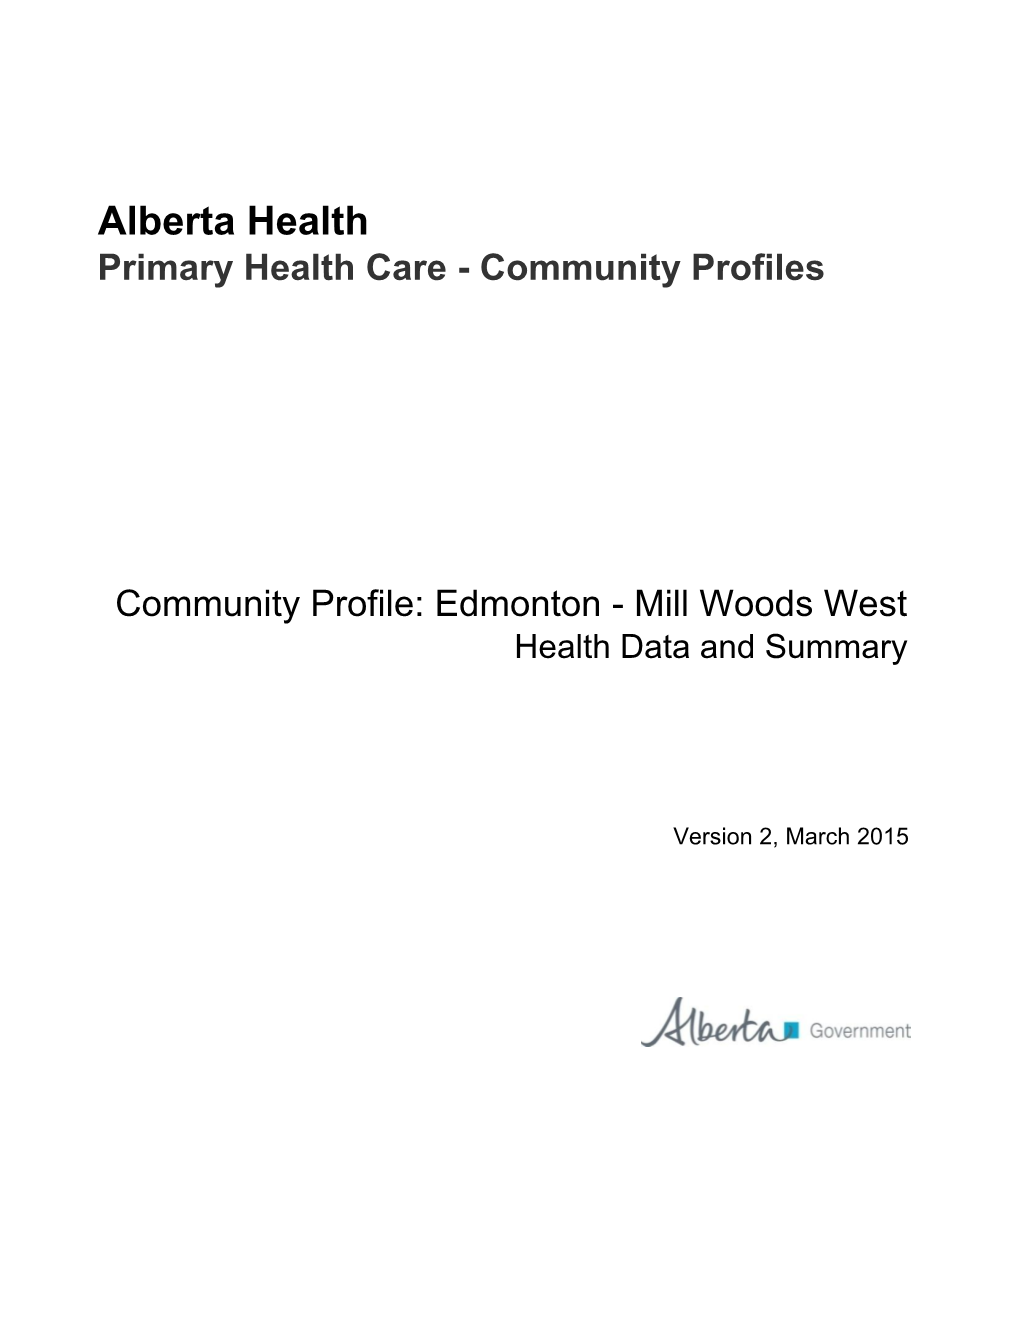 Edmonton - Mill Woods West Health Data and Summary